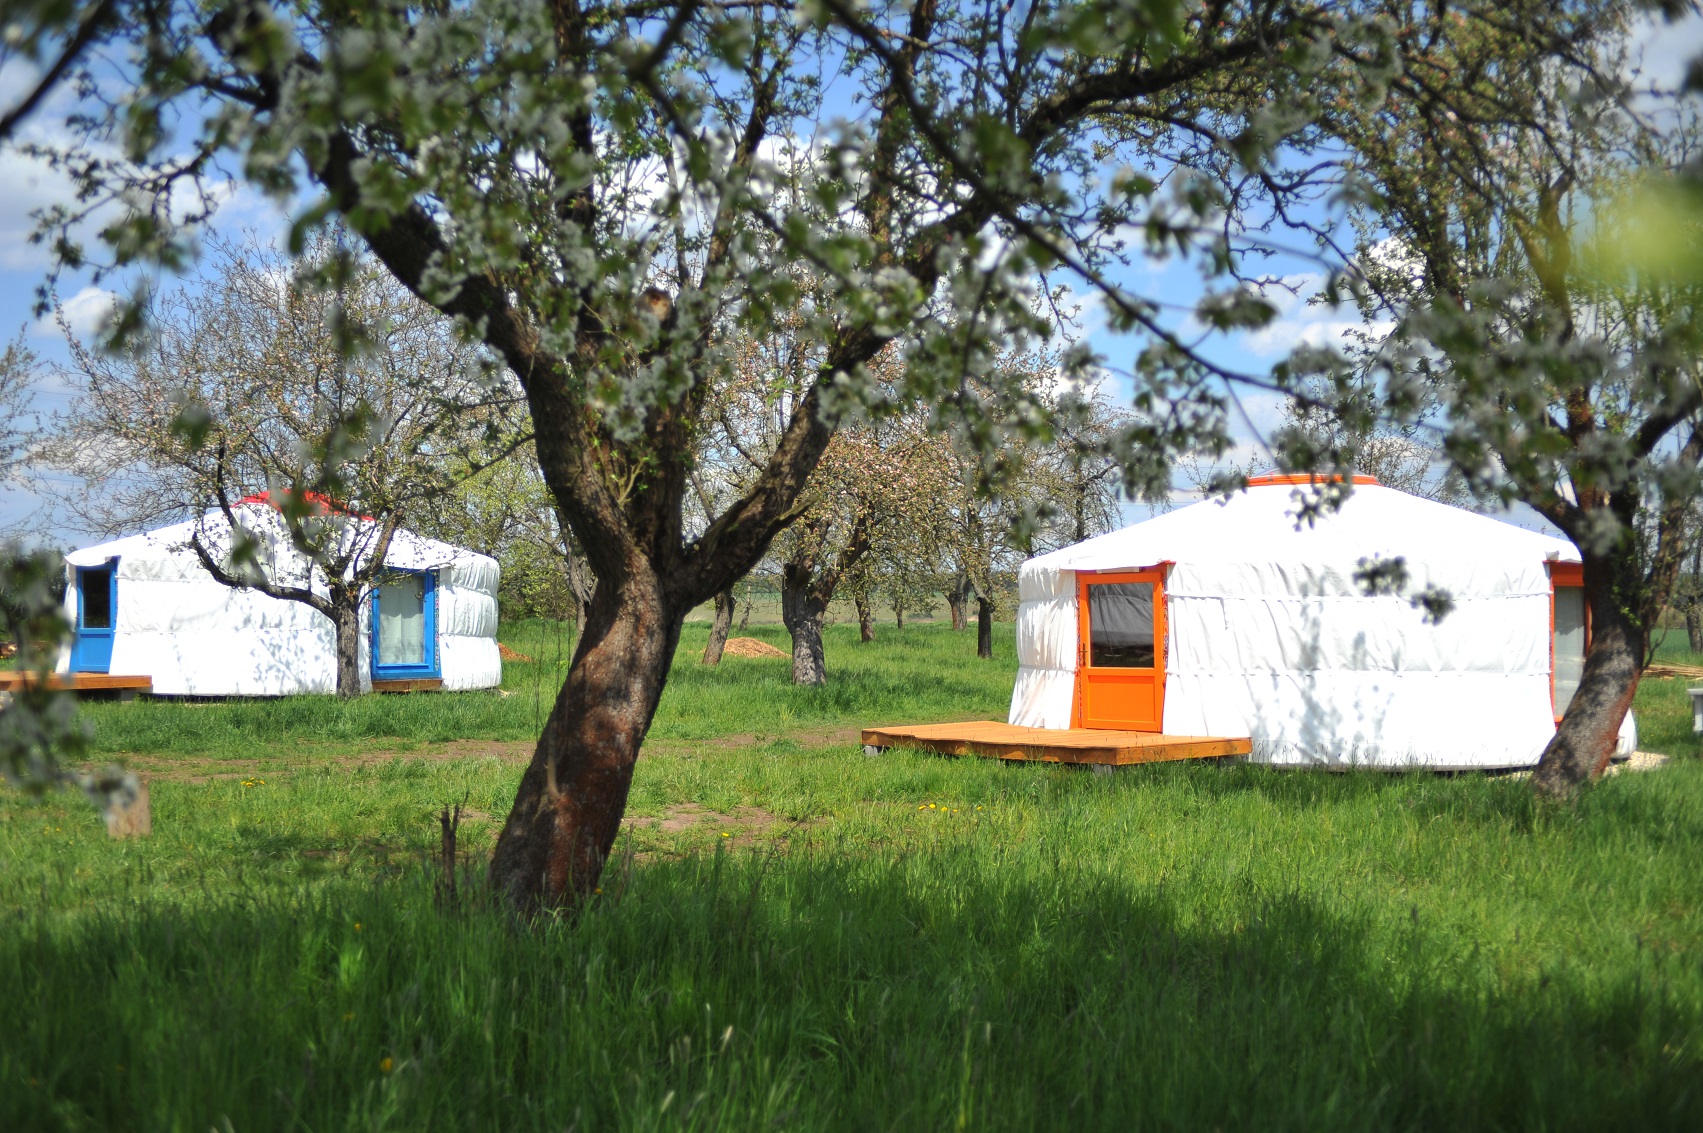 The yurt village